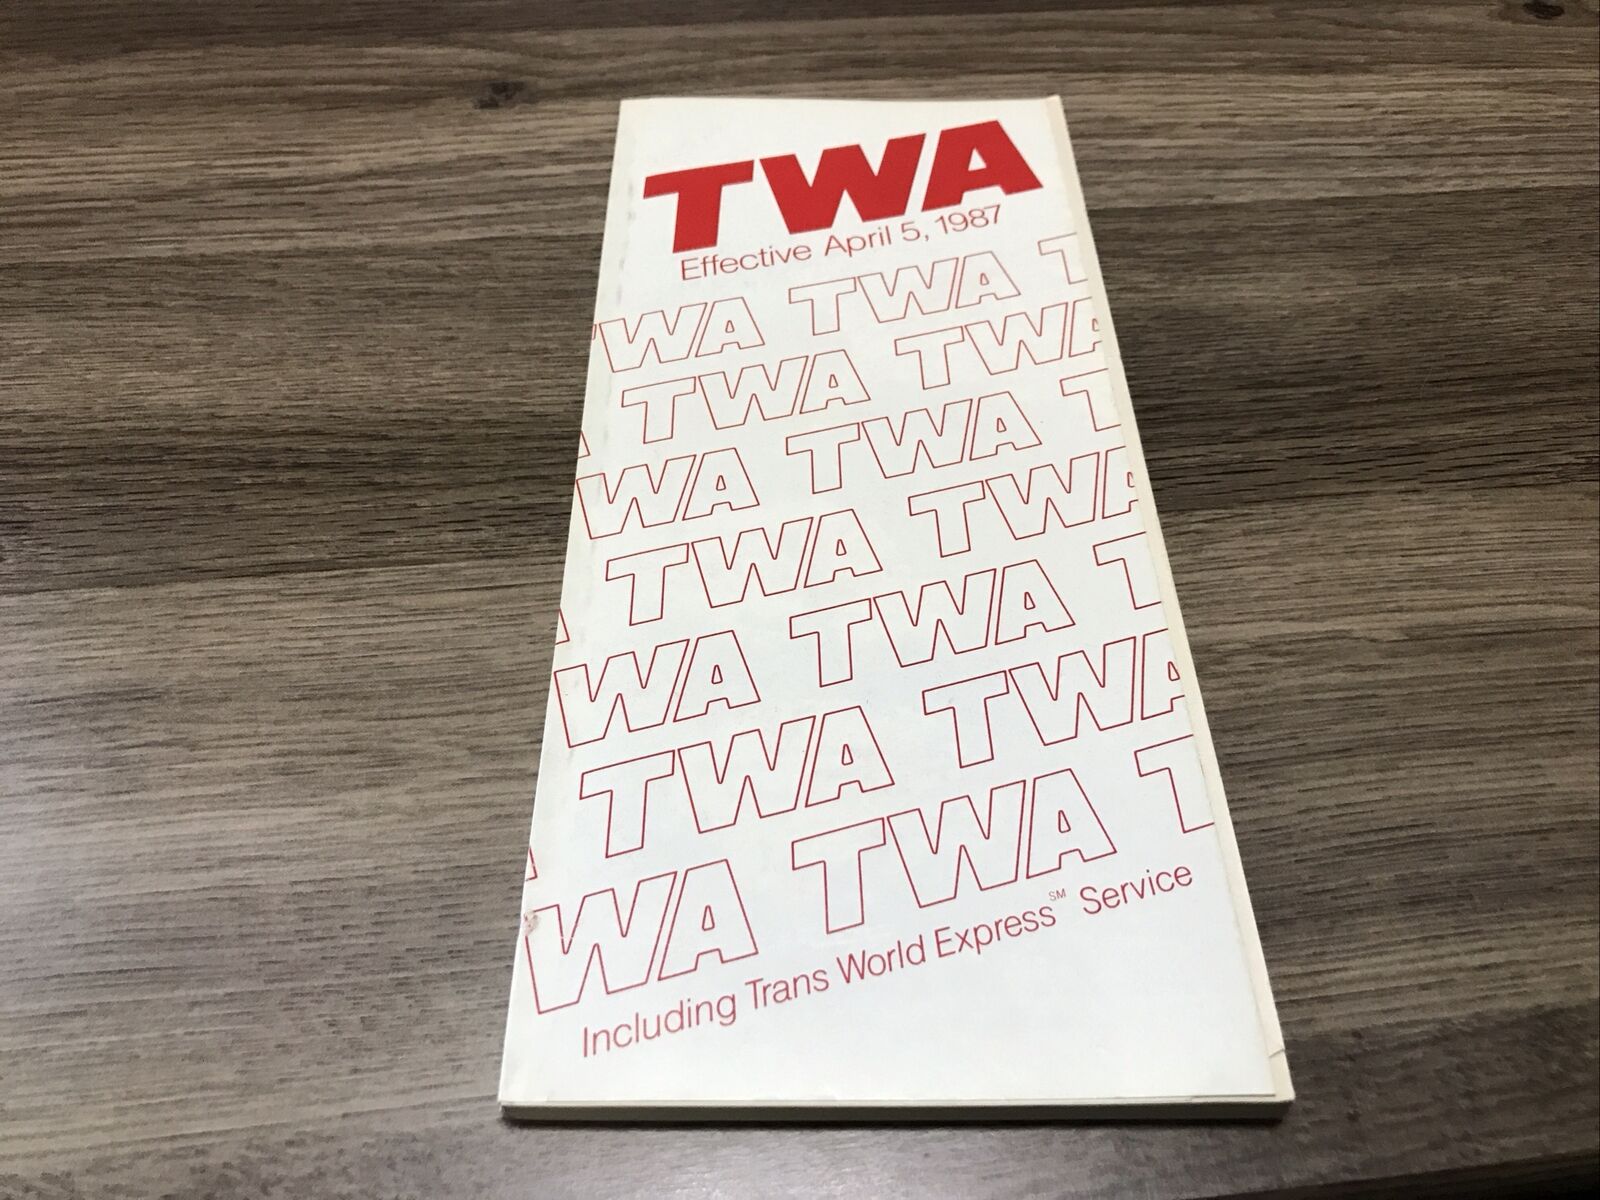 TWA Flight Schedule Apr 5, 1987